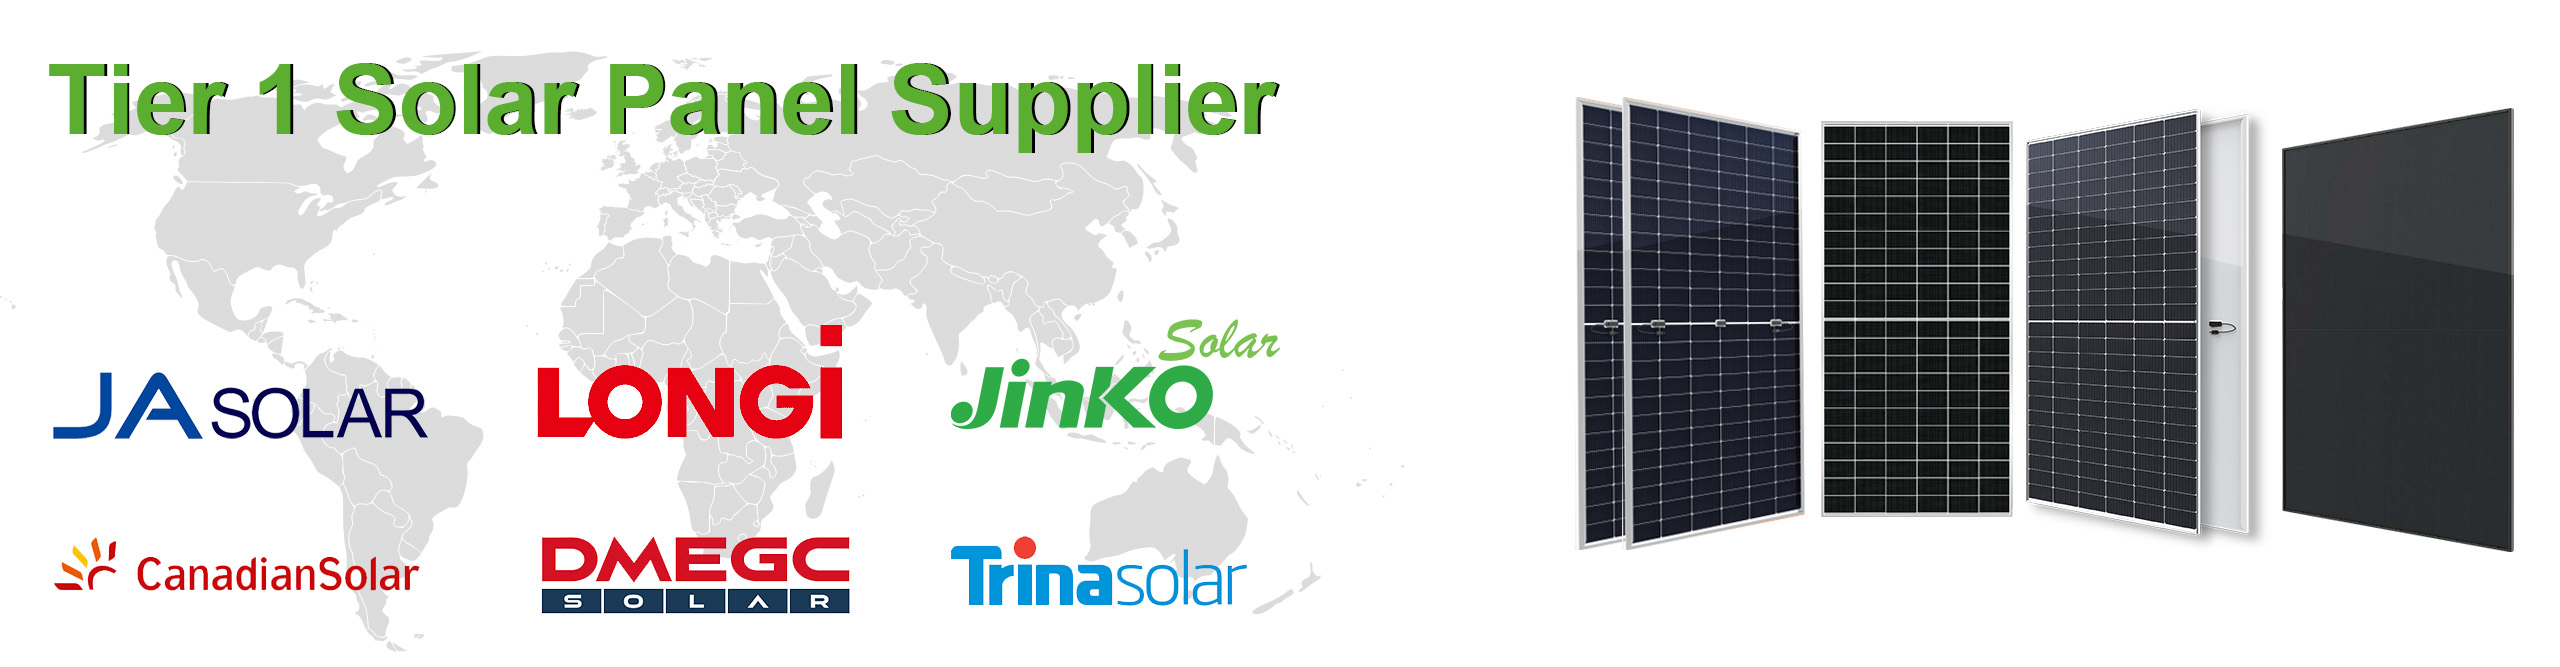 Tier 1 solar panel supplier - HBOWA